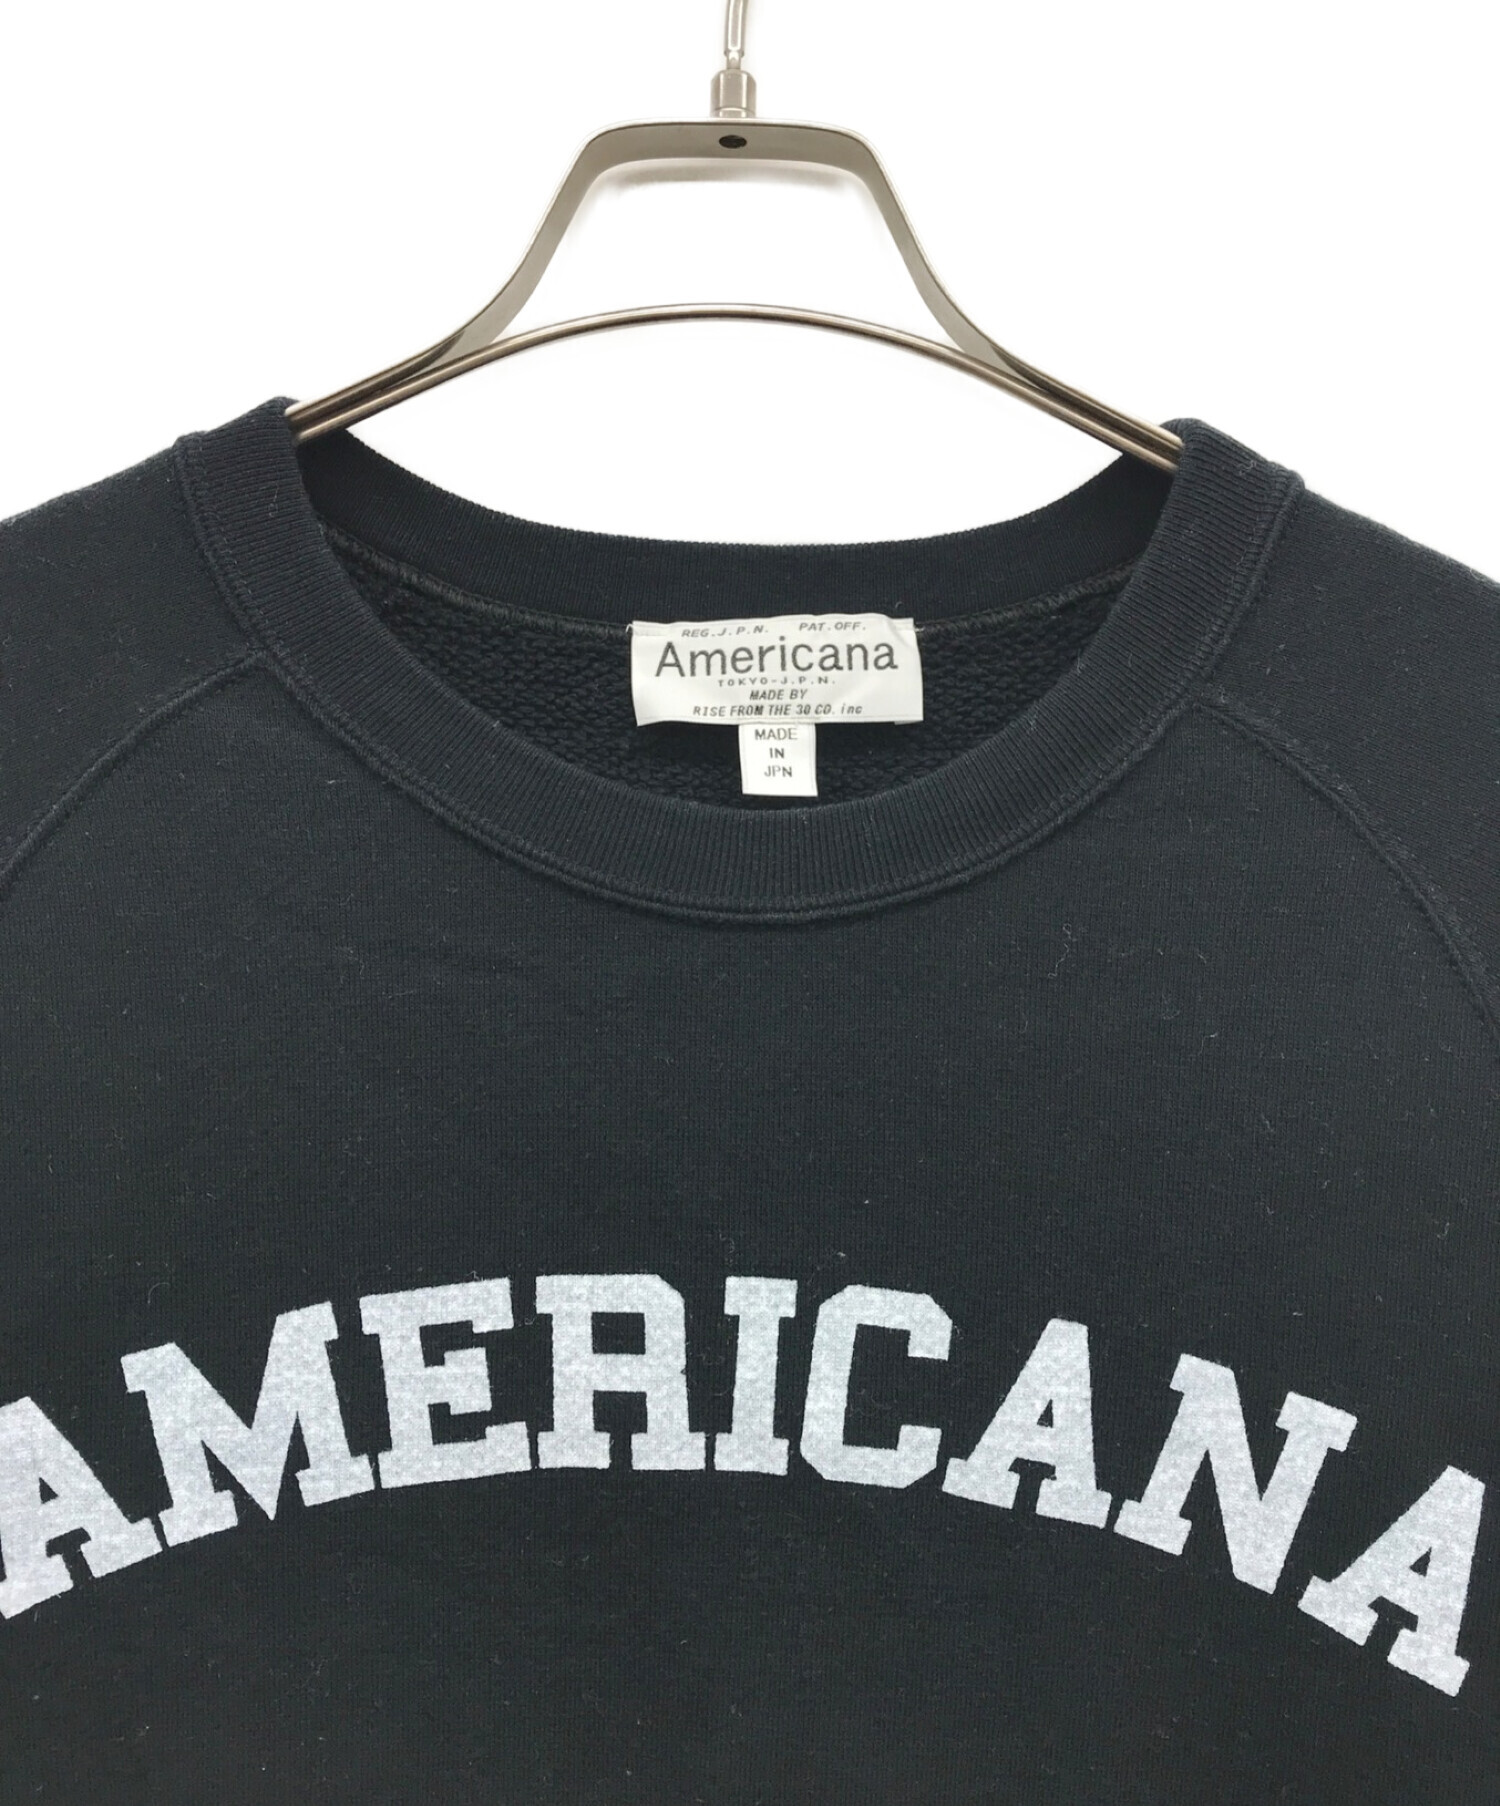 Americana (アメリカーナ) ロゴクルースウェット ブラック サイズ:L